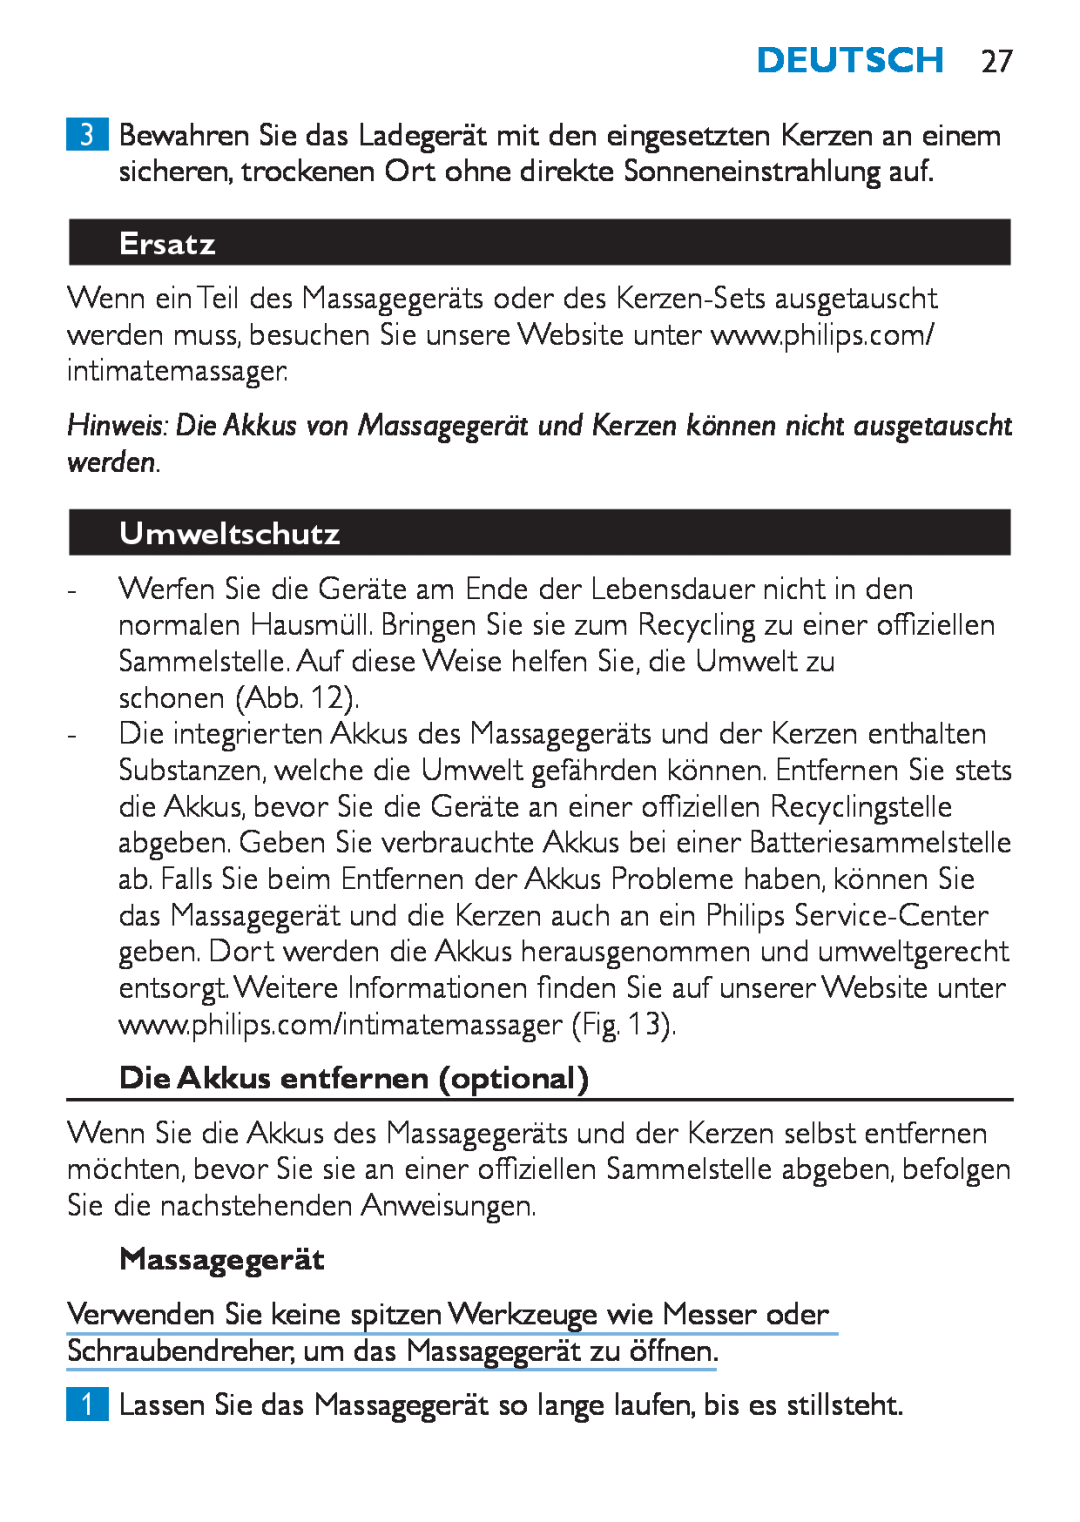 Philips HF8430 manual Ersatz, Umweltschutz, Die Akkus entfernen optional, Deutsch, Massagegerät 